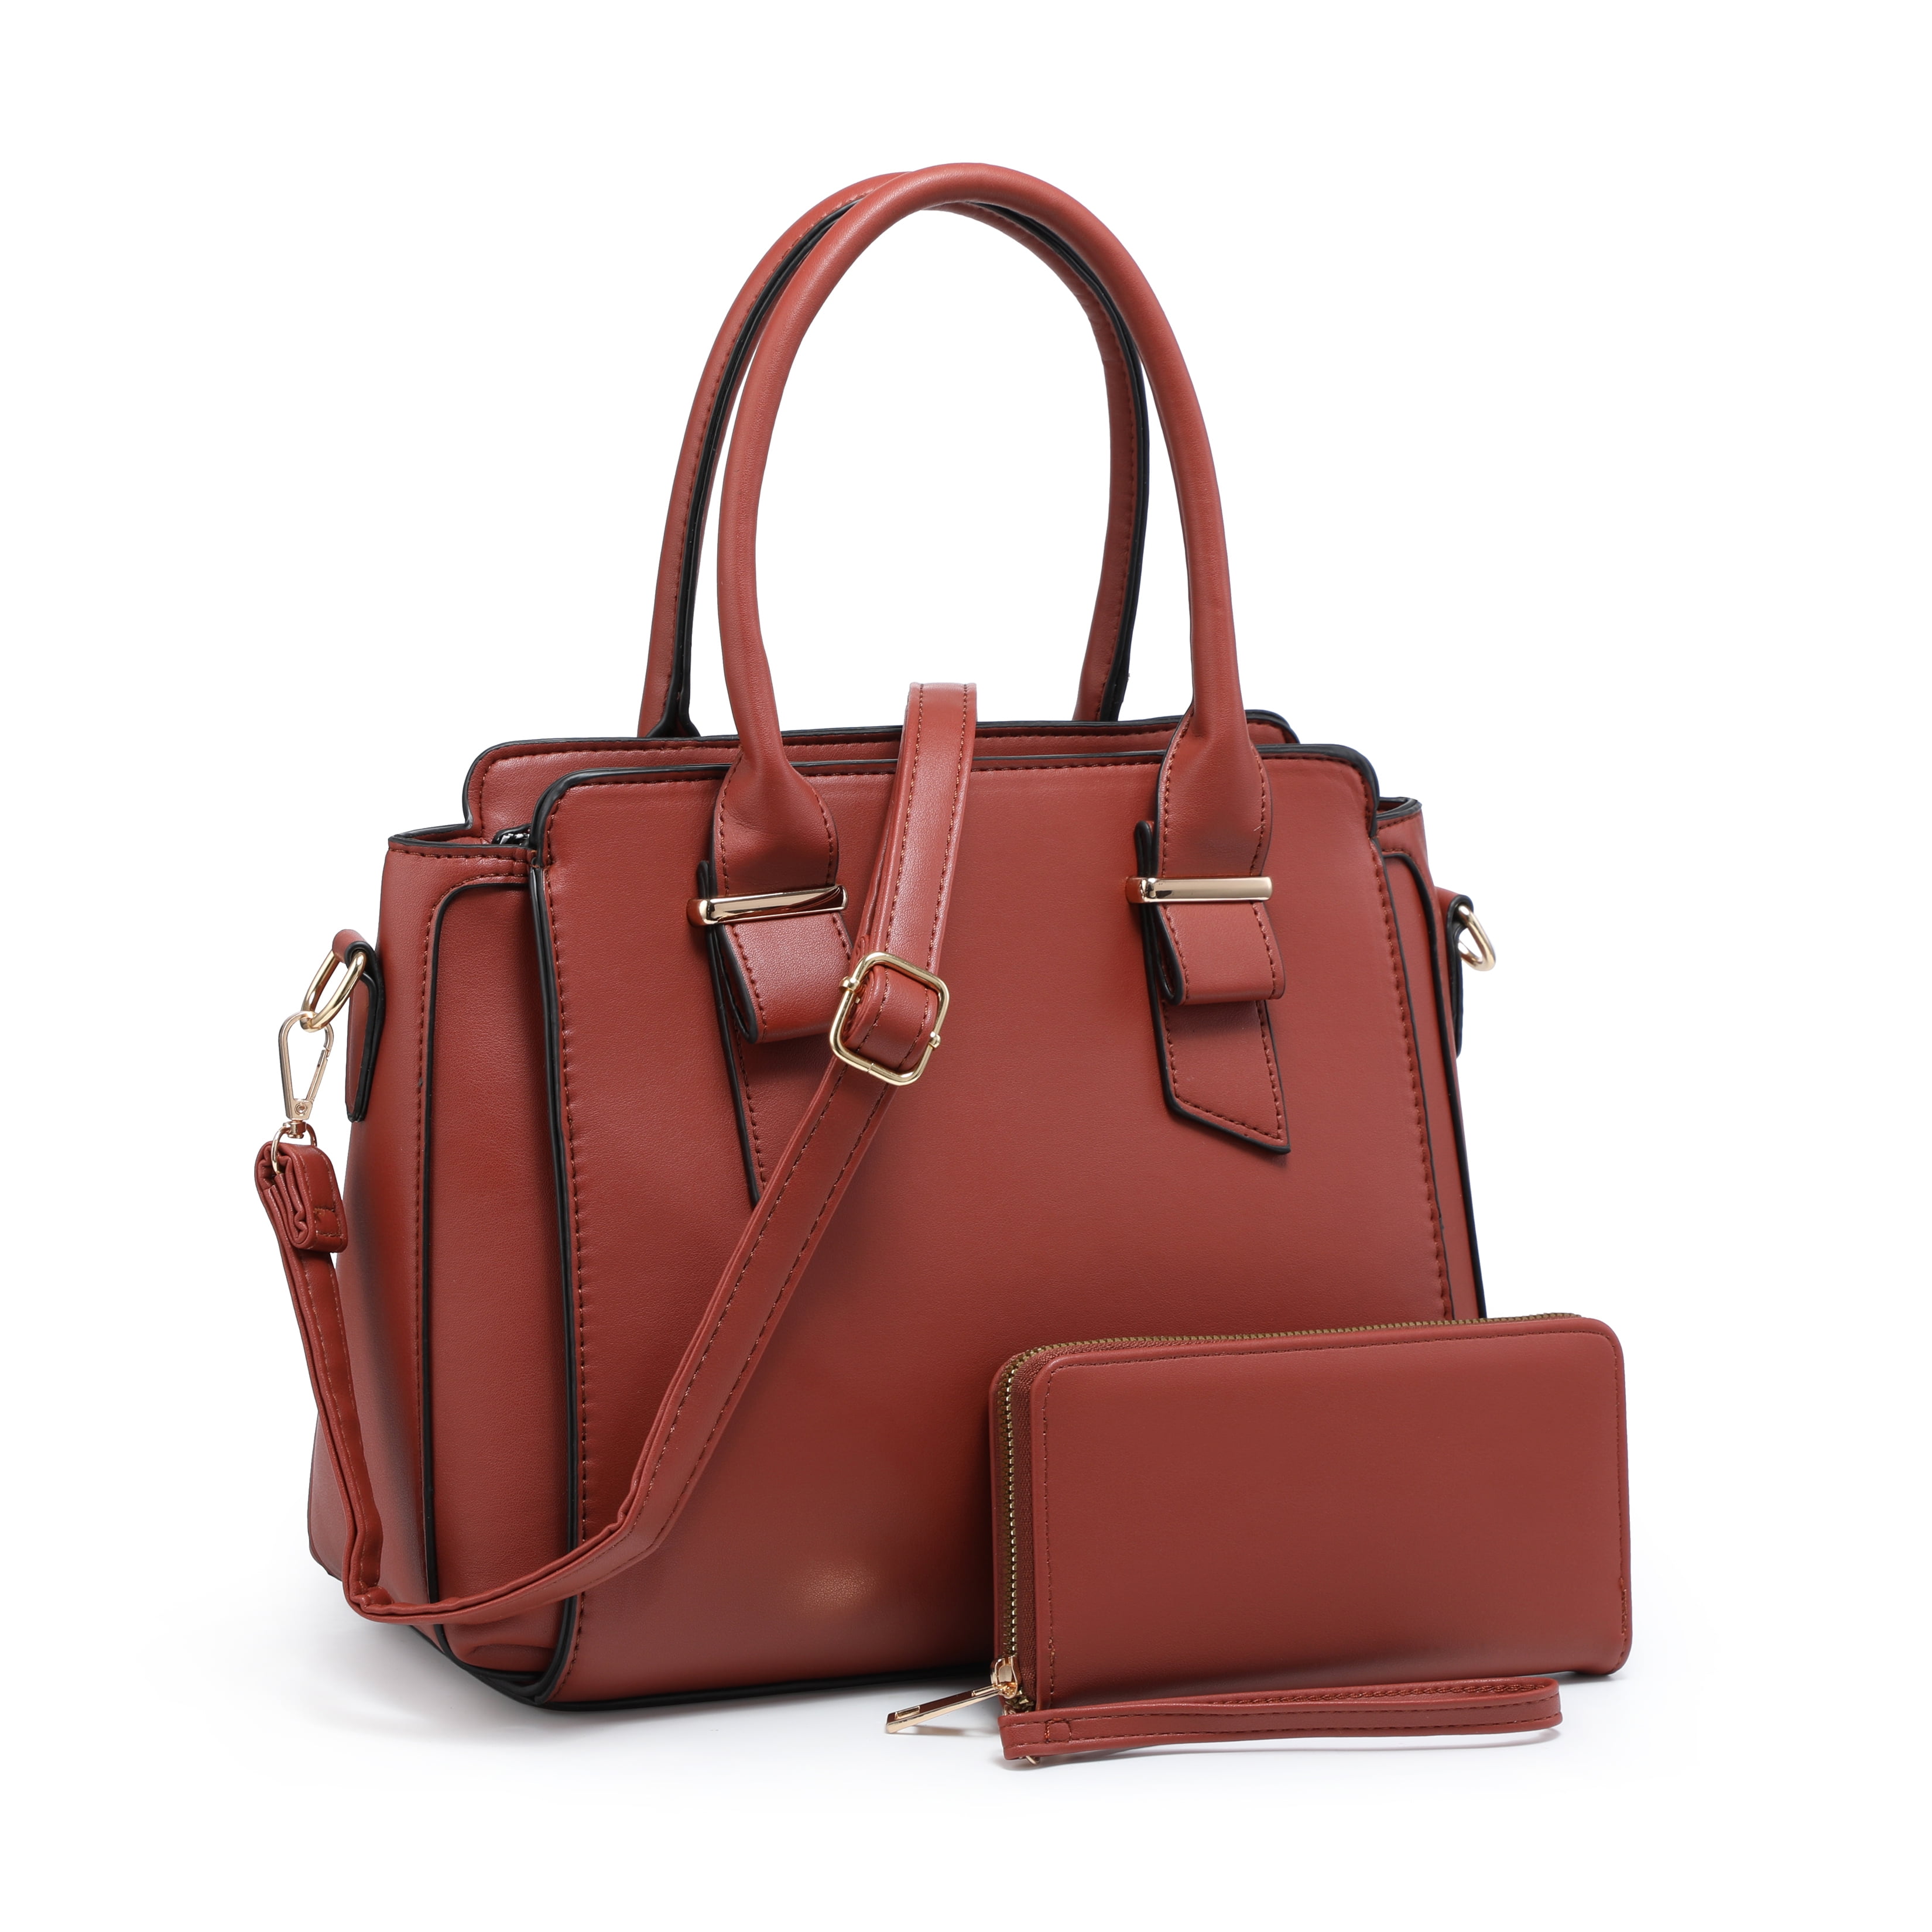 Floral Top Handle Color Block Satchel Bag with Detachable/Adjustable Shoulder Strap